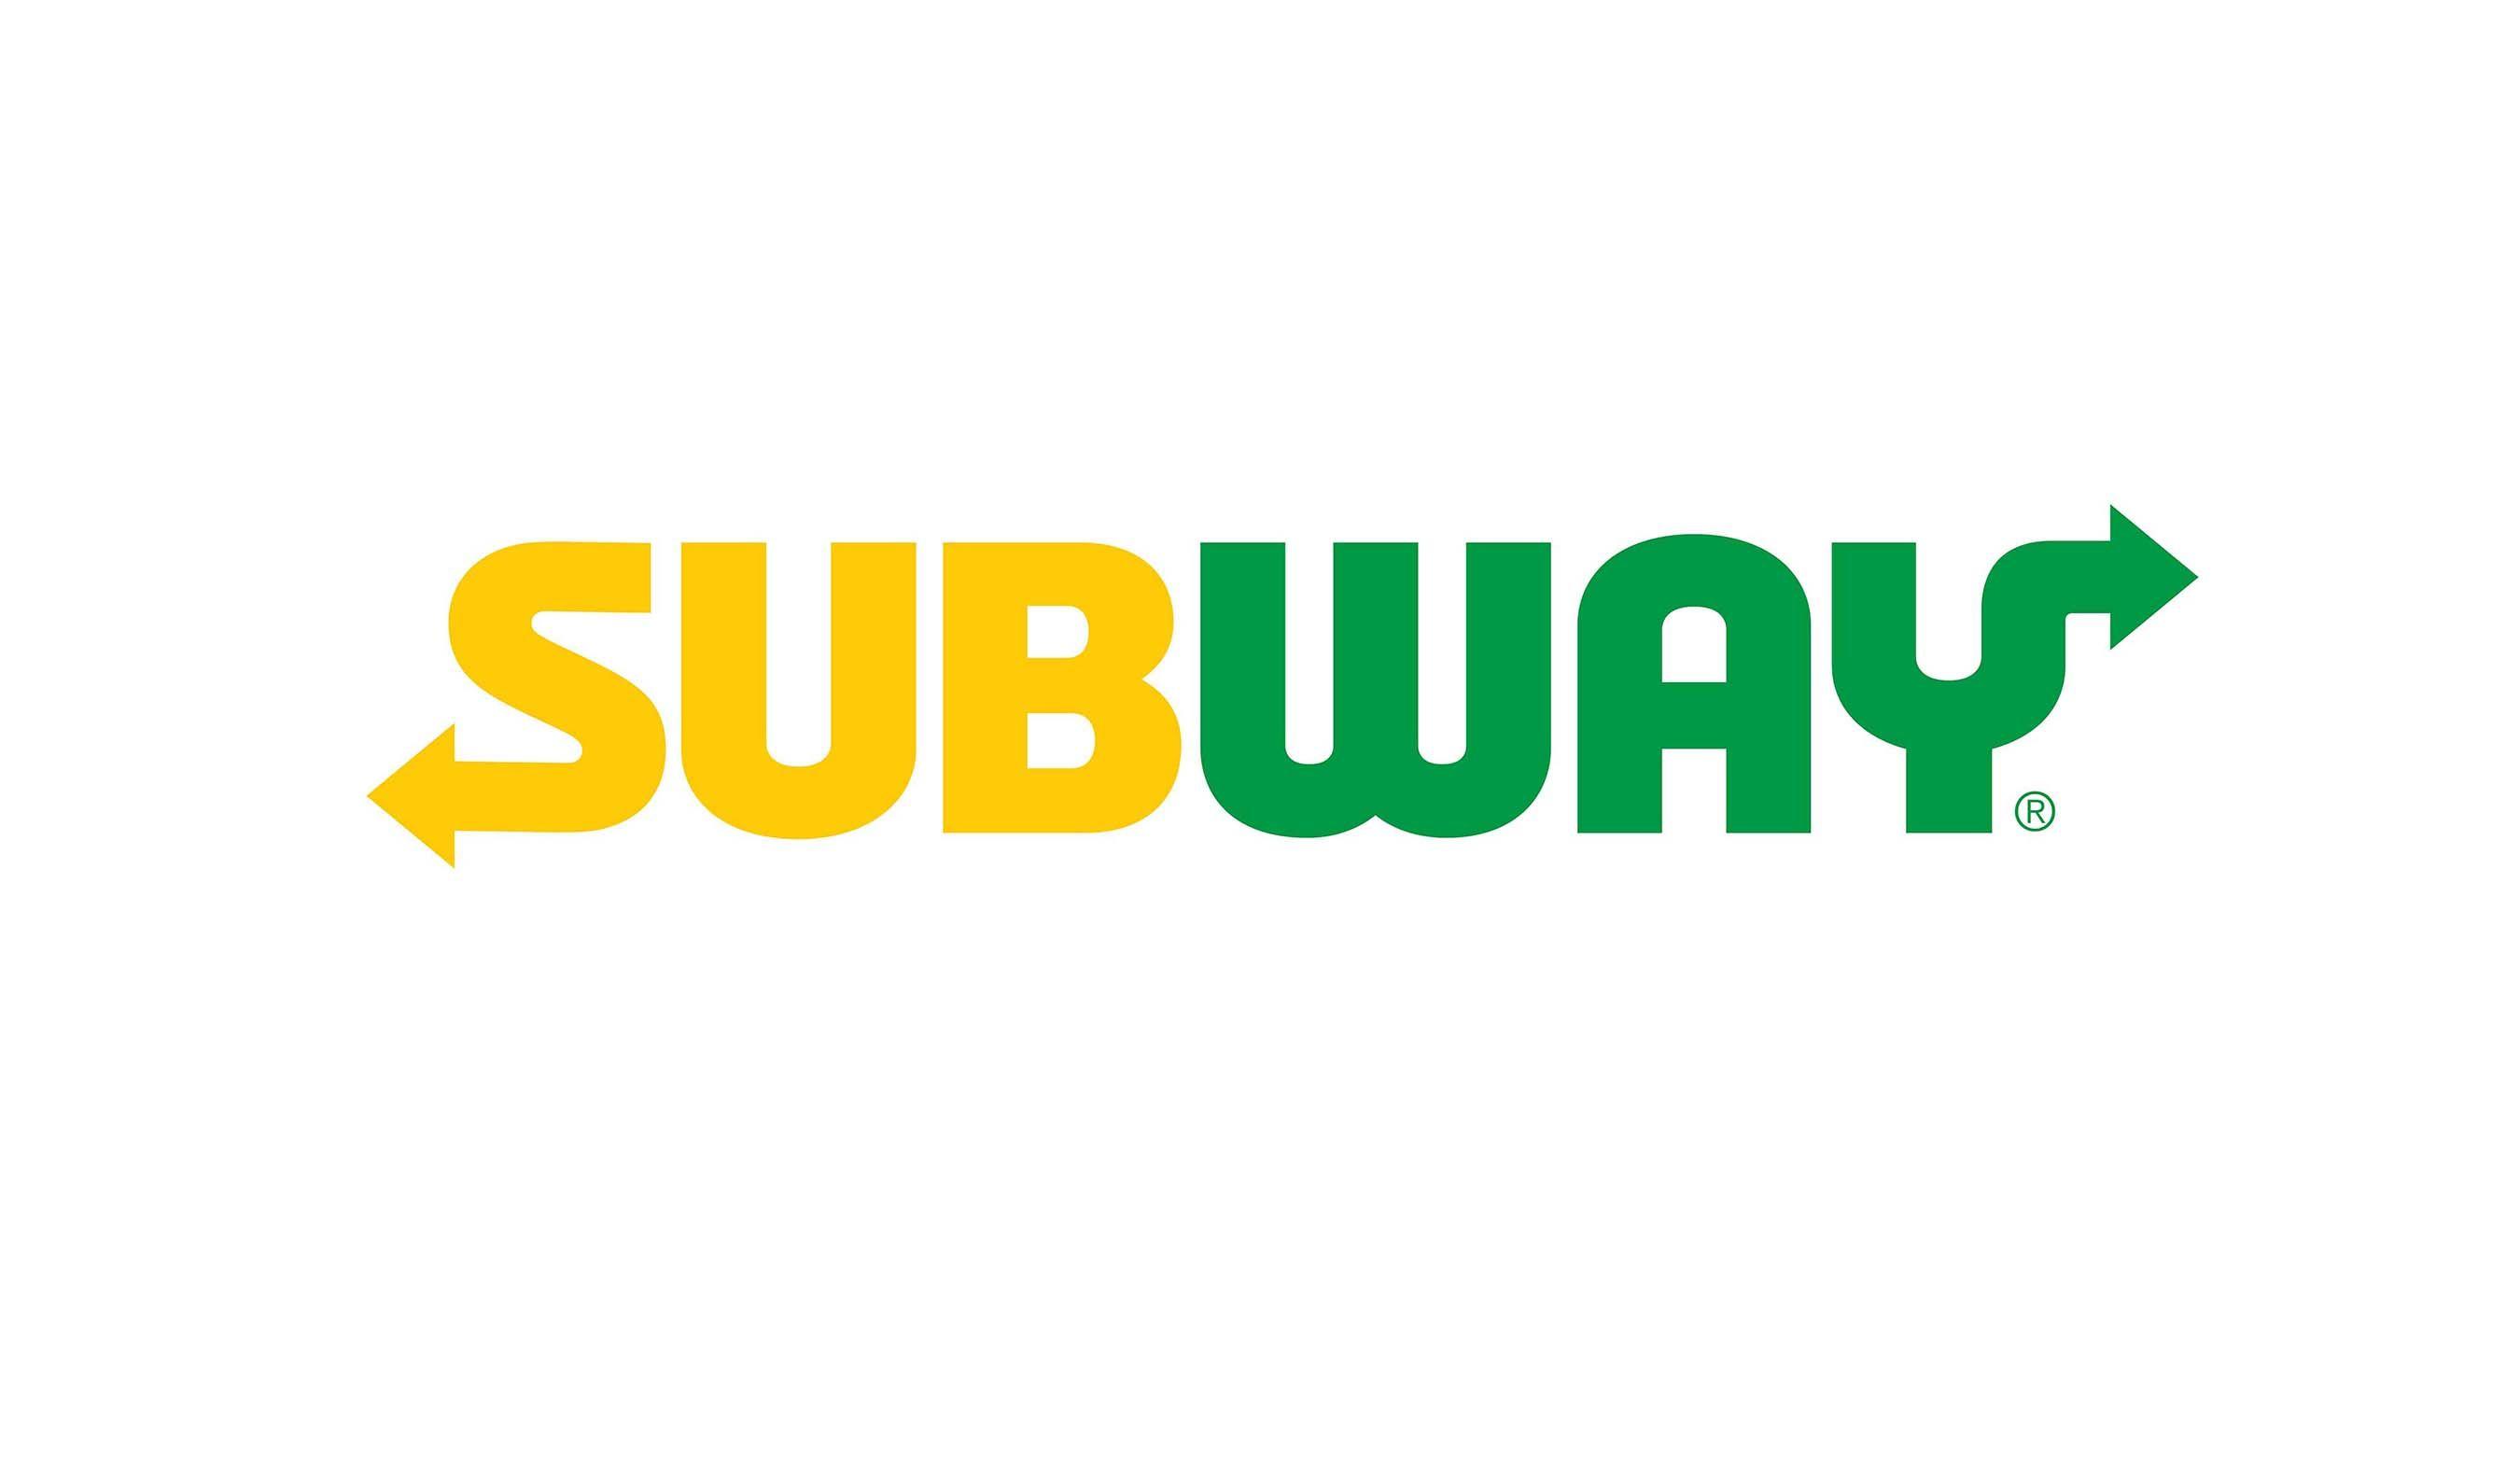 Green Brand Logo - Subway reveals minimalist new logo and symbol – Design Week